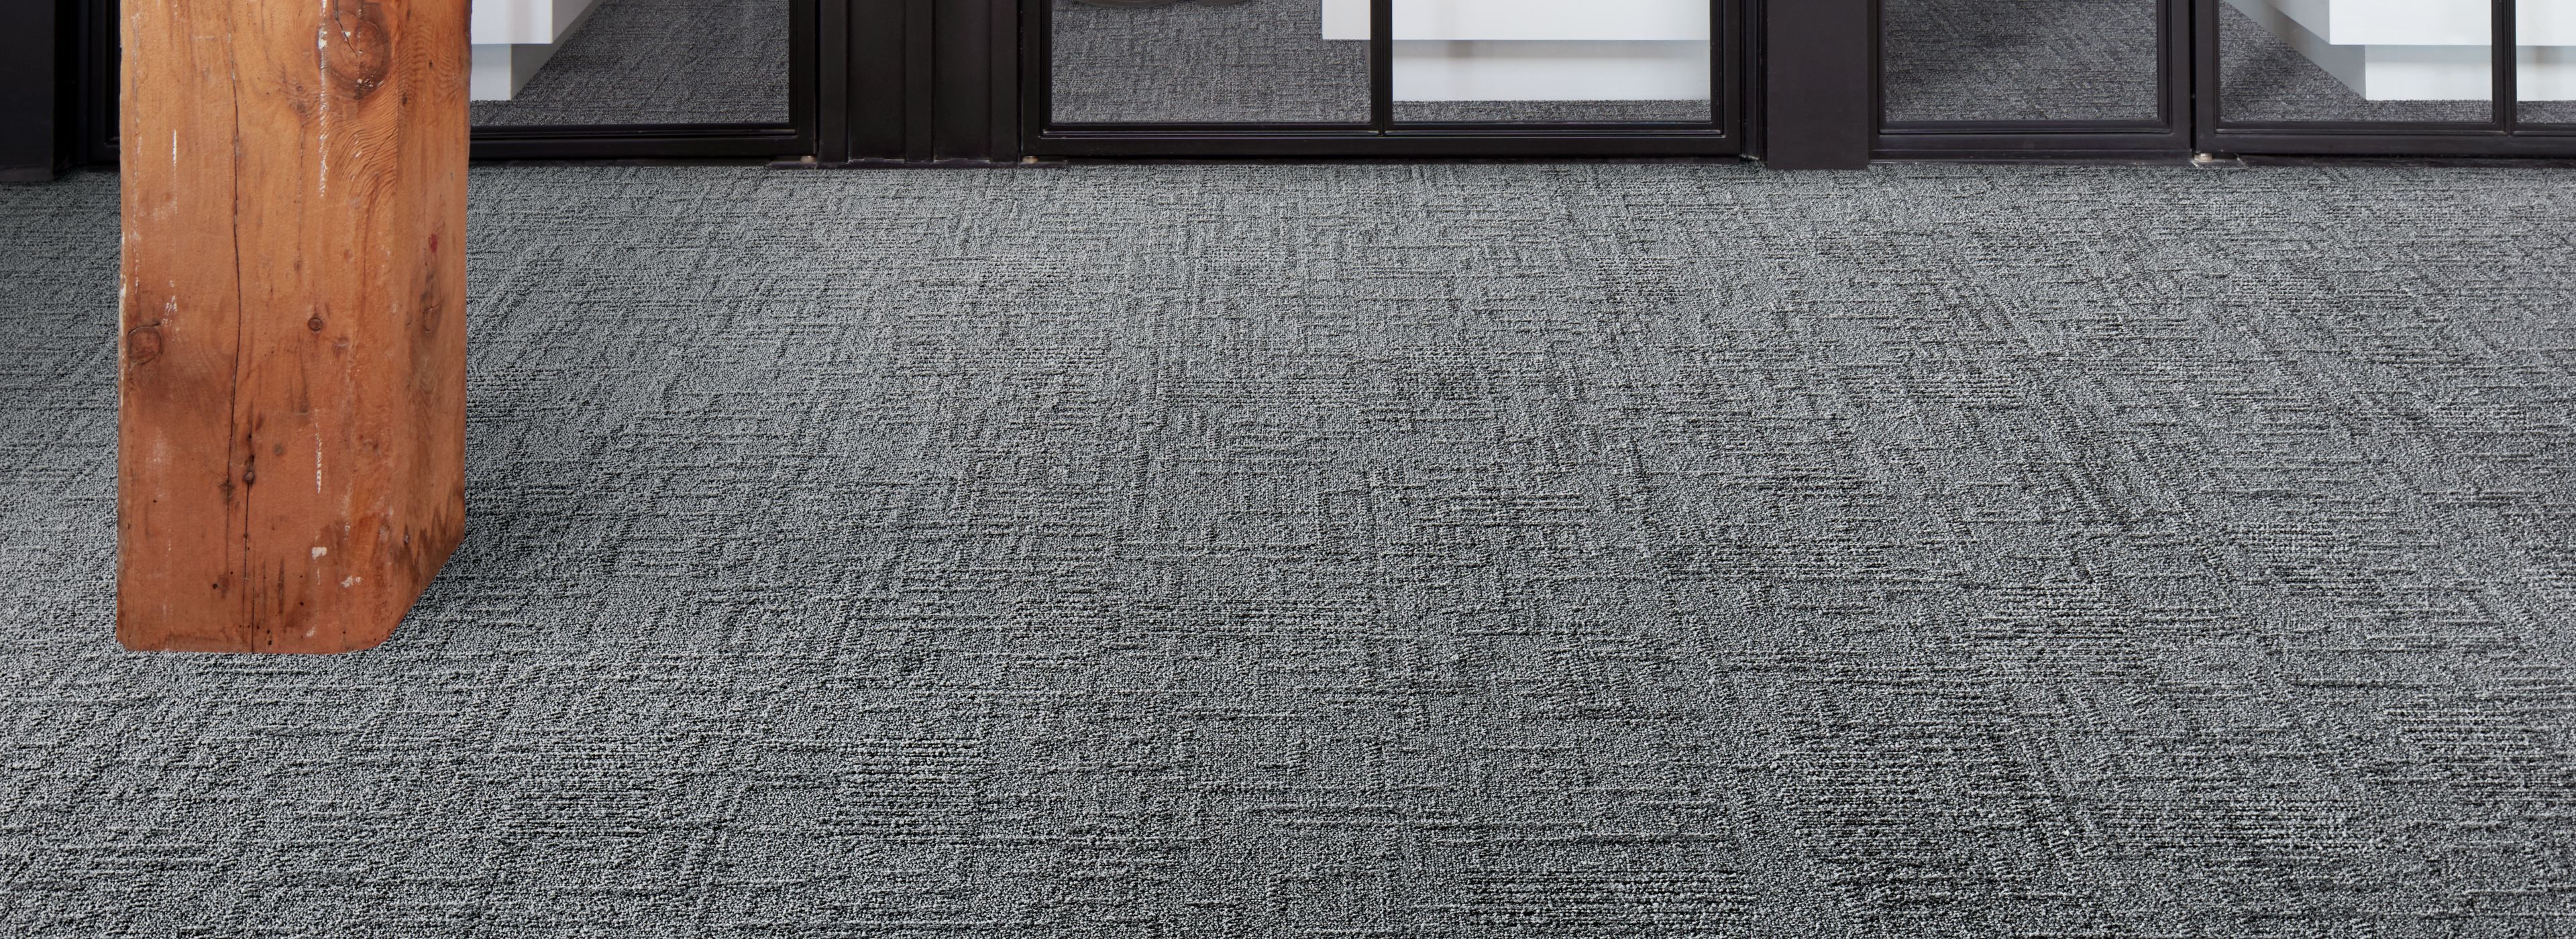 Interface Vintage Kimono carpet tile in office area with focus rooms número de imagen 1